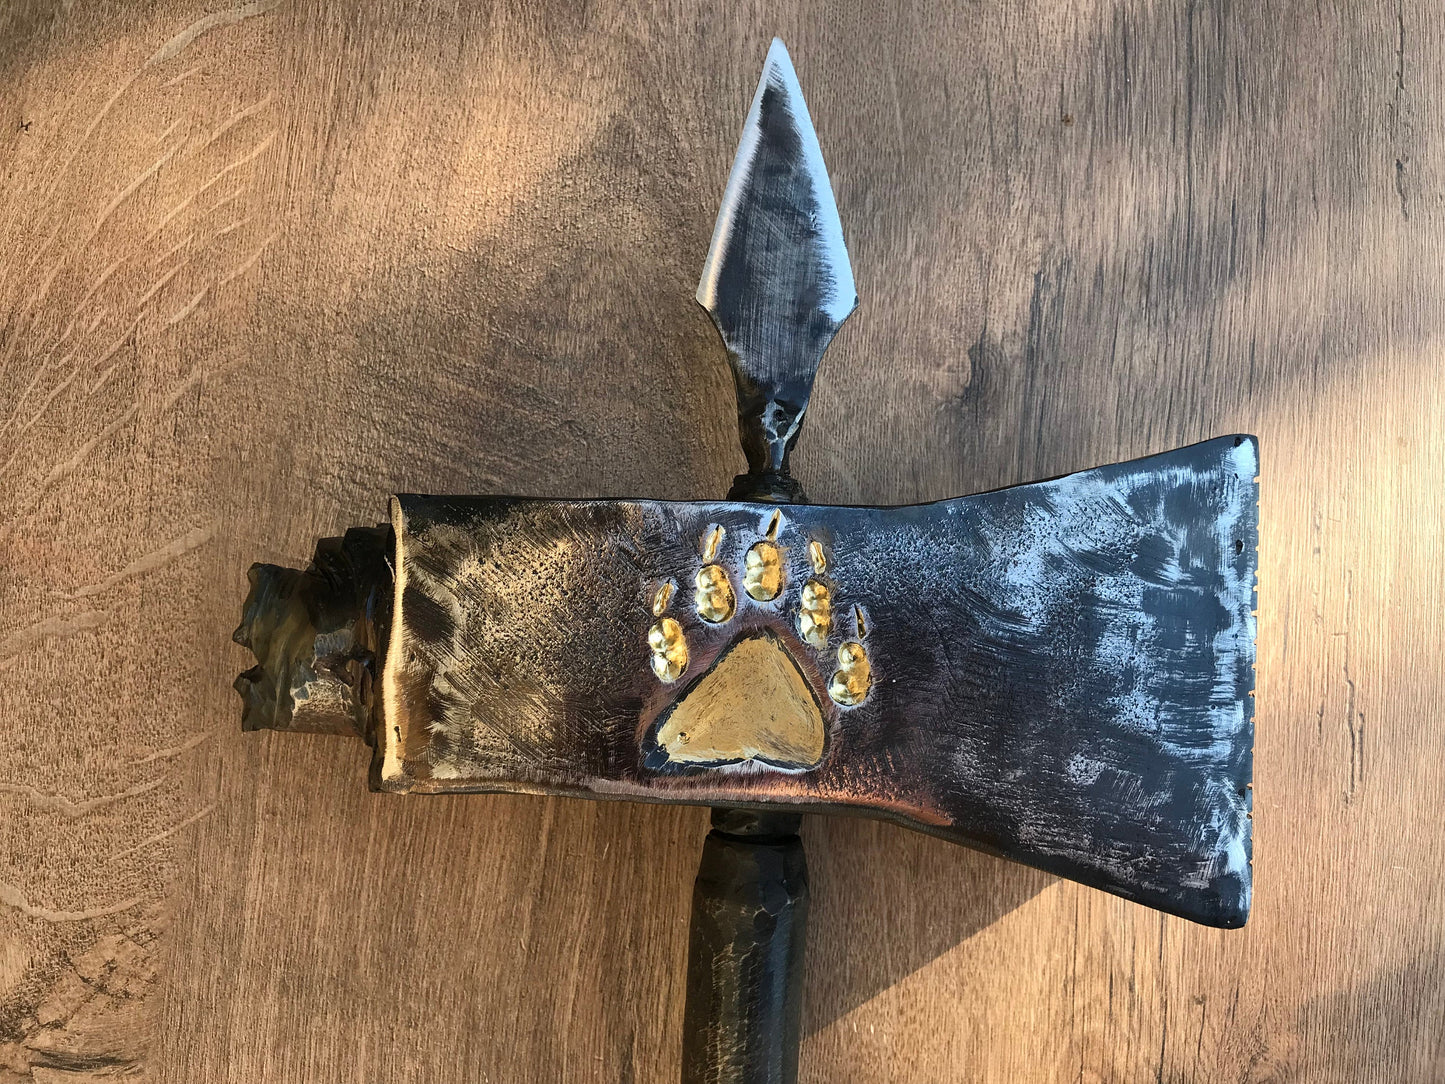 Decorative hammer, hammer, cosplay weapon, cosplay armor, viking hammer, viking axe, customized hammer, iron anniversary gift,tools,dad gift